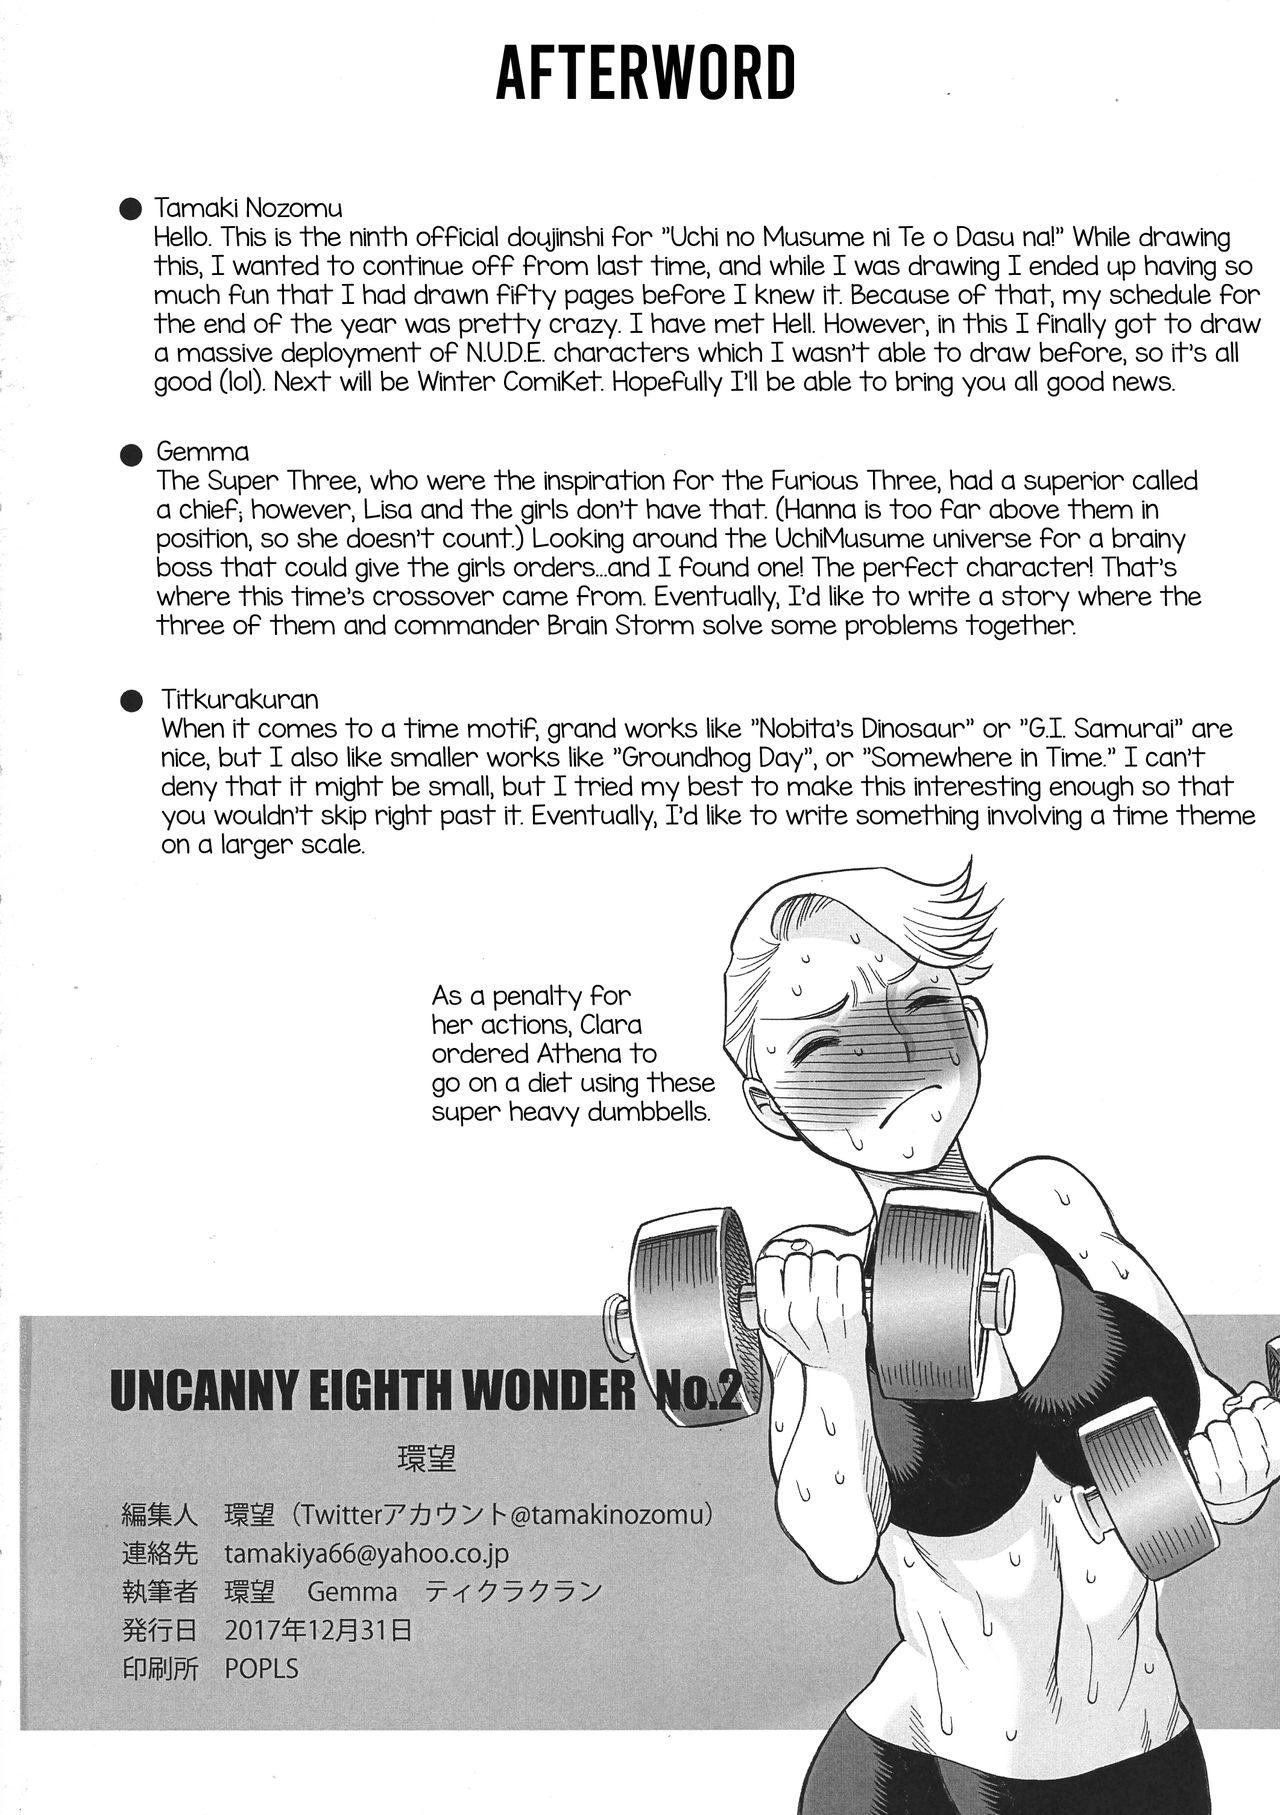 French Uncanny EIGHTHWONDER No.2 - Uchi no musume ni te o dasuna Animated - Page 55